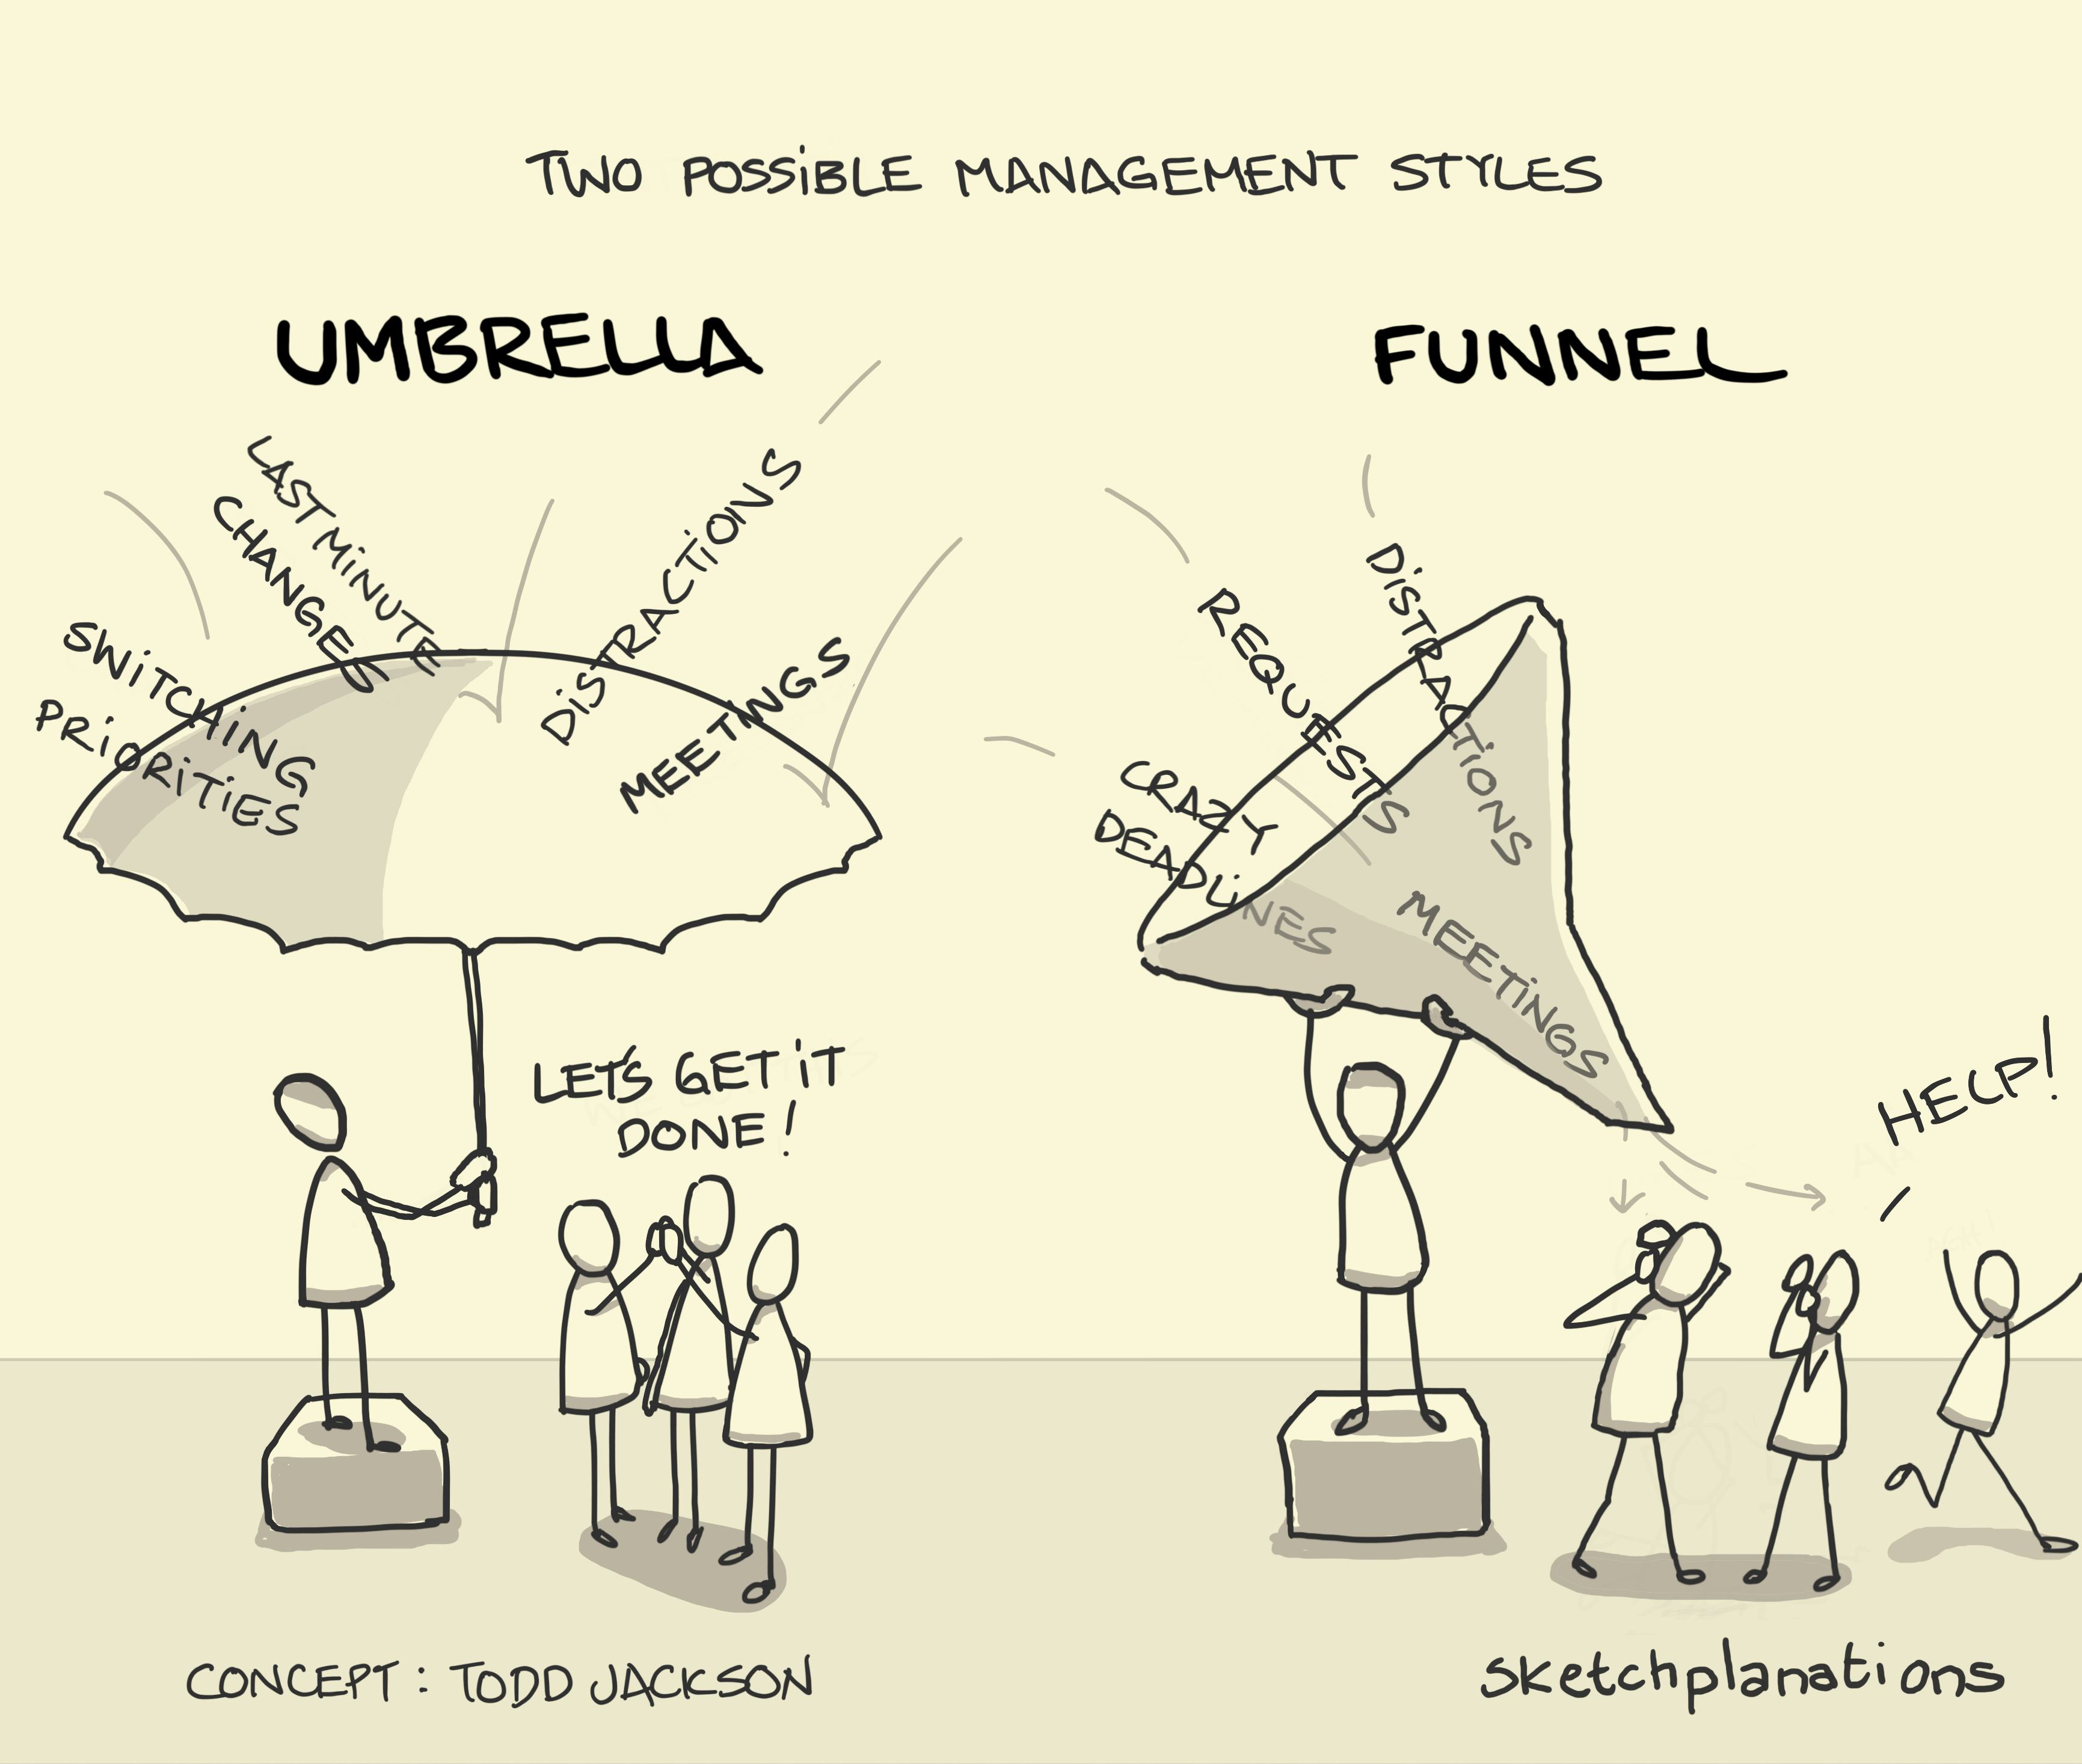 Umbrellas and funnels - Sketchplanations